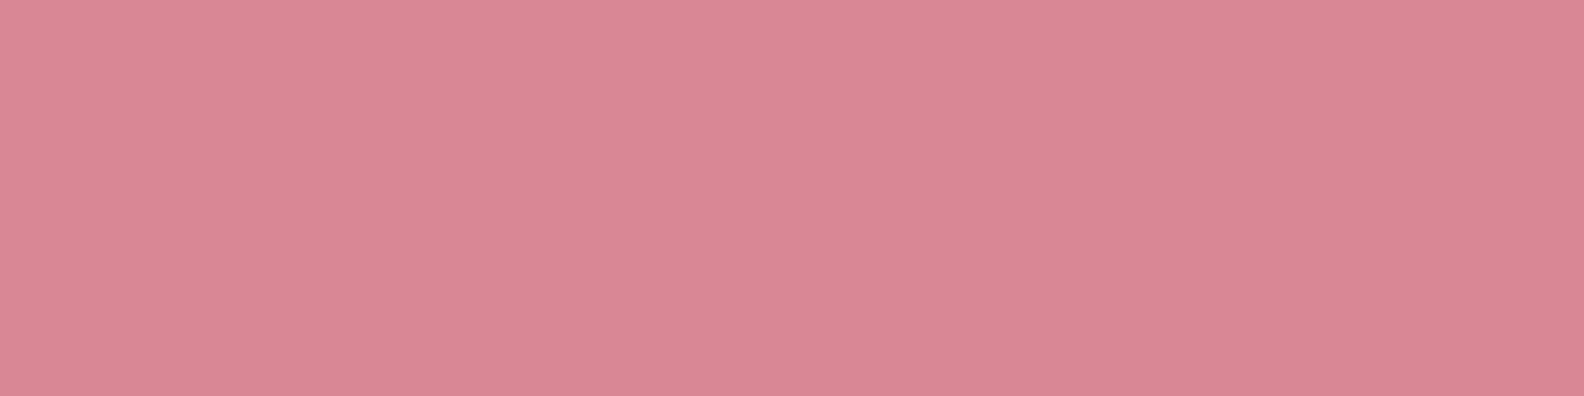 1584x396 Shimmering Blush Solid Color Background